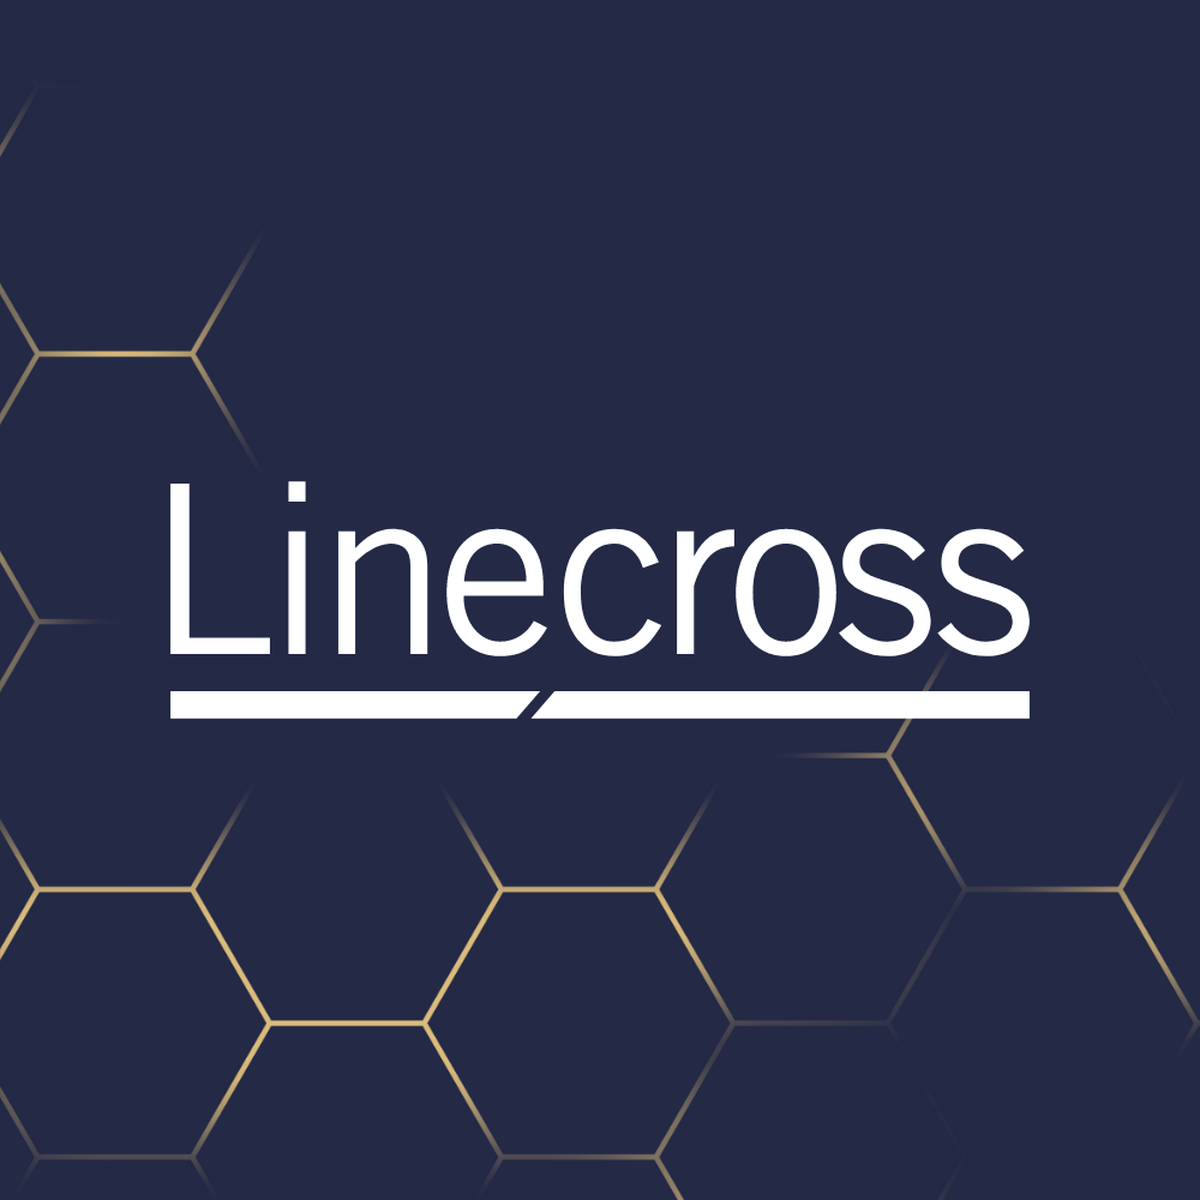 Linecross logo